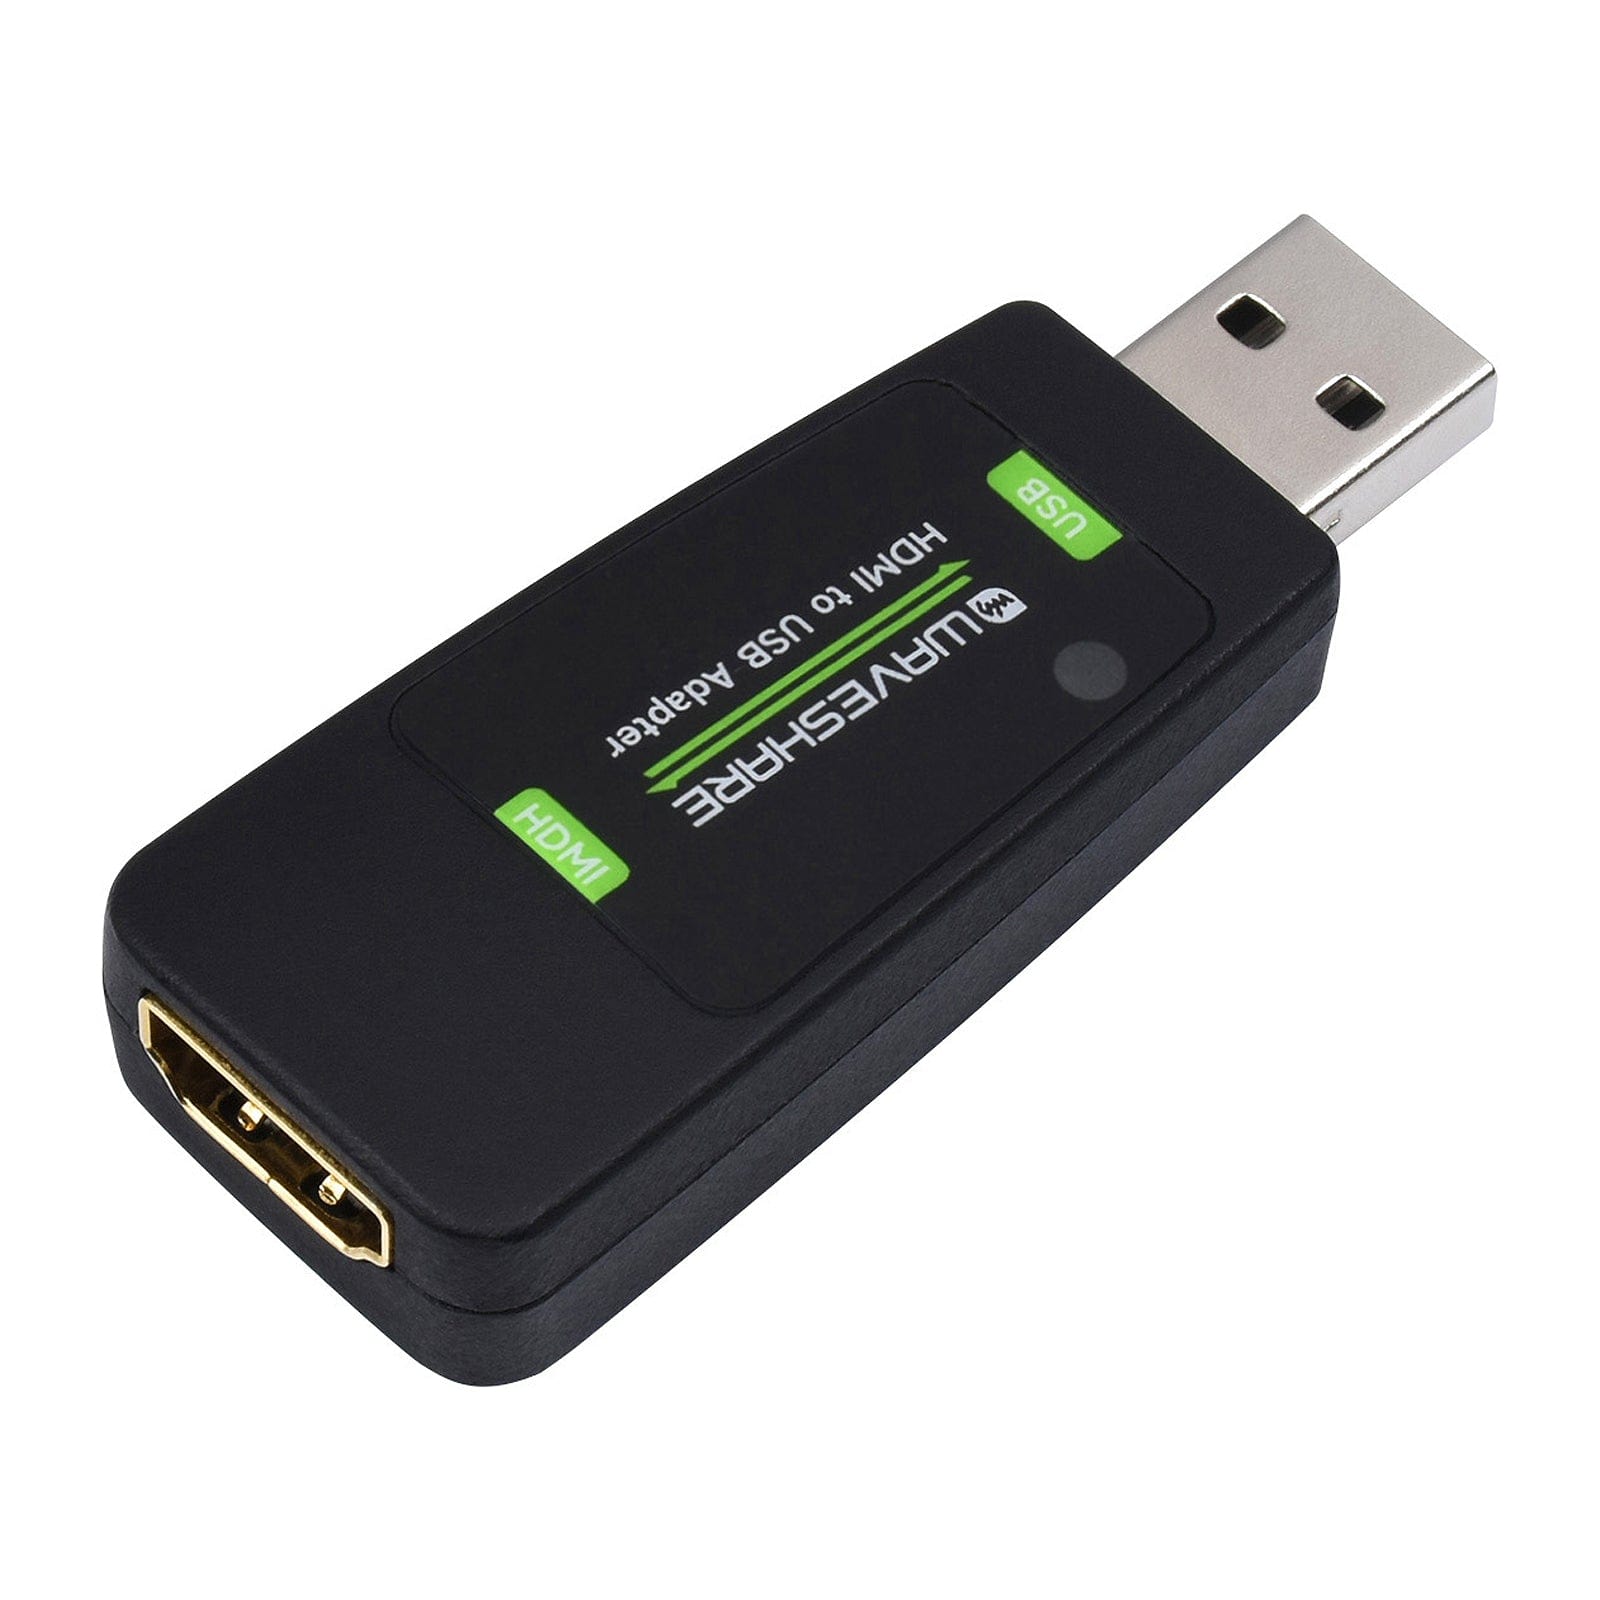 HDMI to USB 3.0 Adapter - The Pi Hut